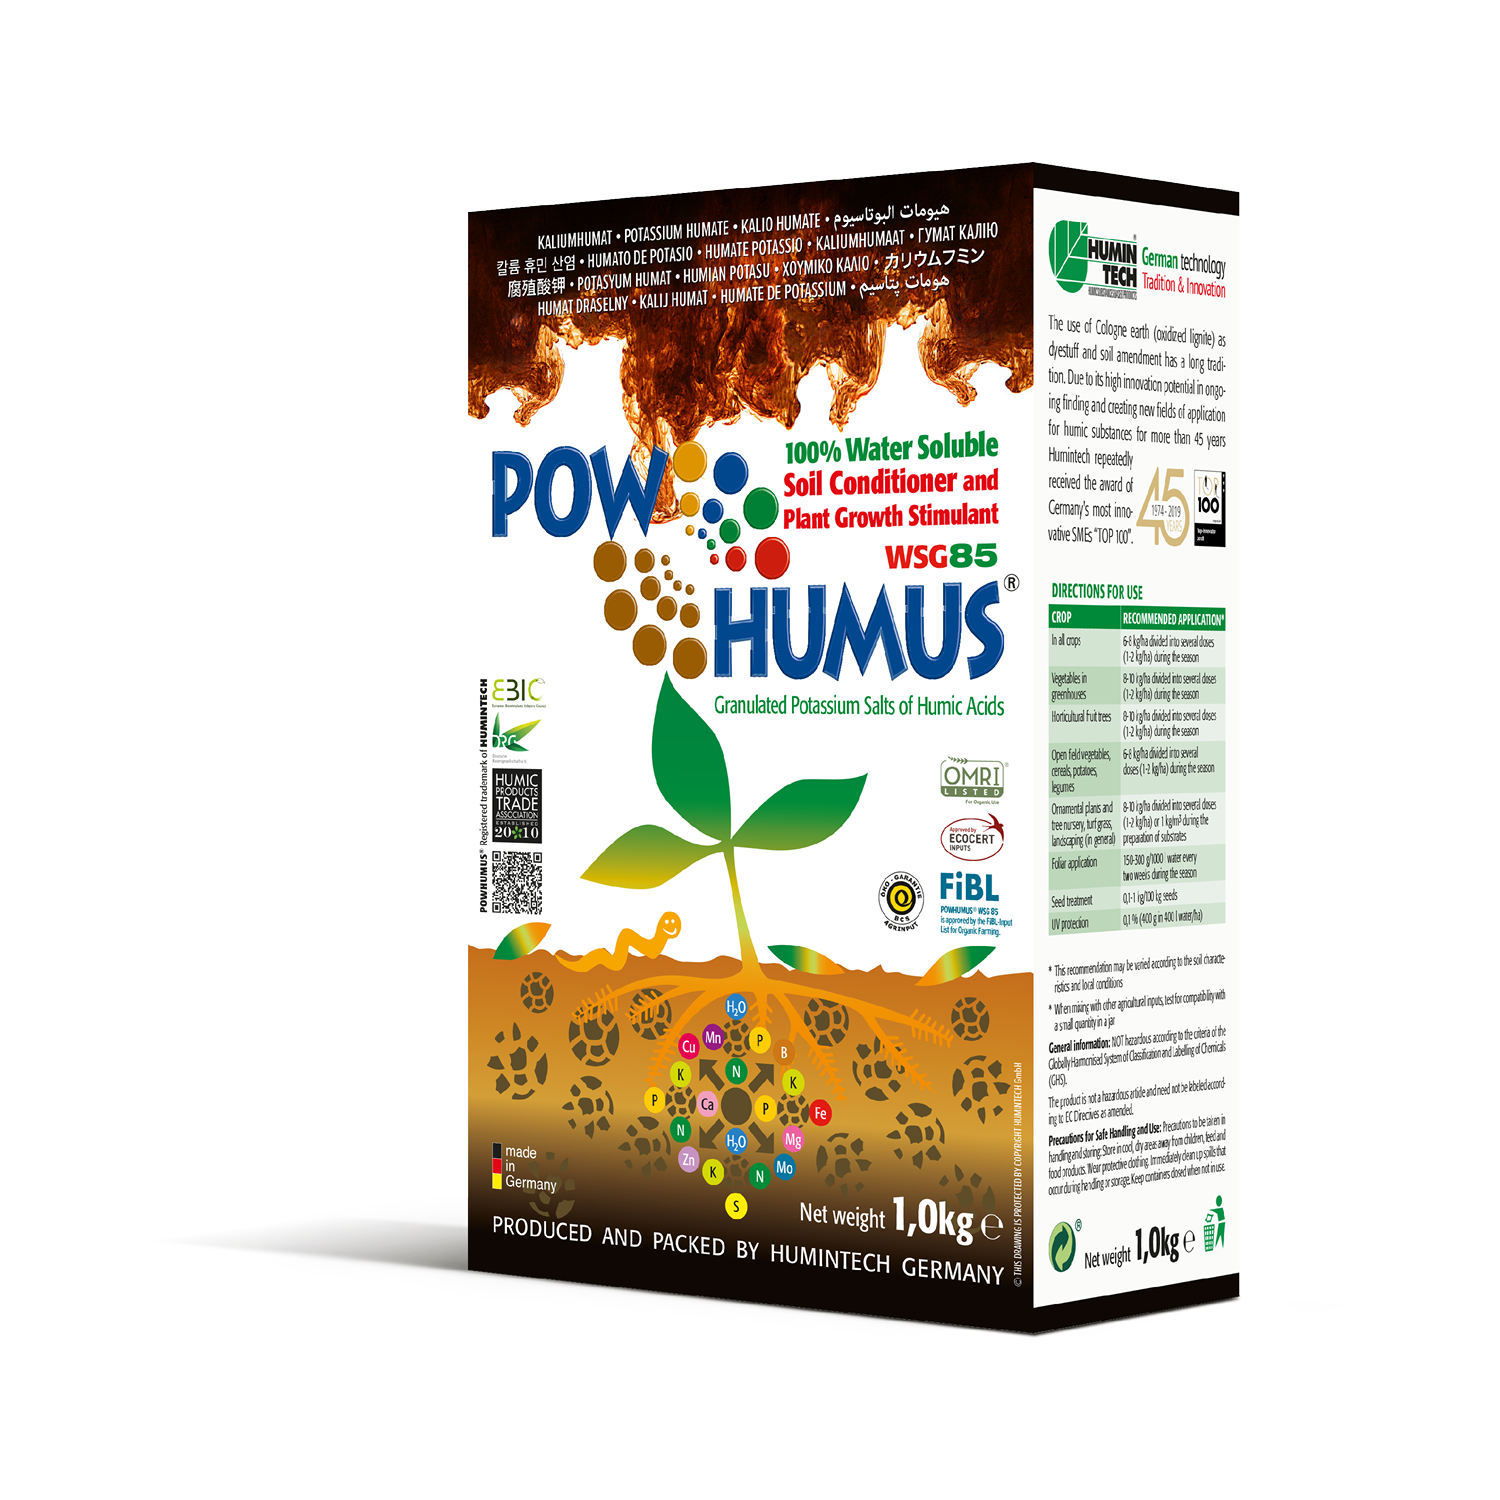 POWHUMUS WSG 85 100% water soluble Organic Soil Conditioner Carton box